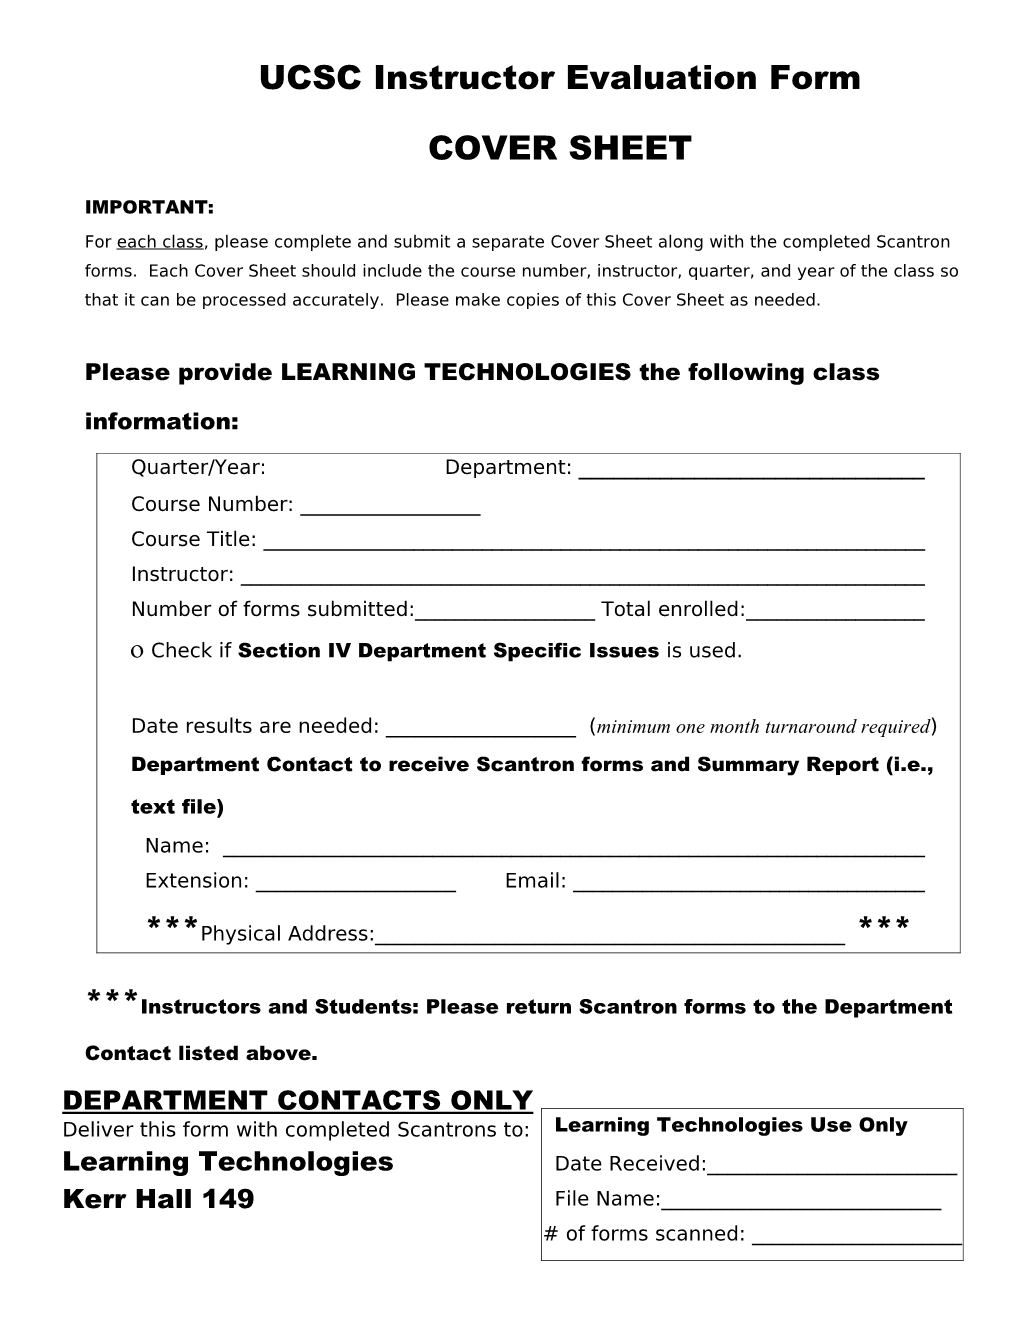 UCSC Instructor Evaluation Form